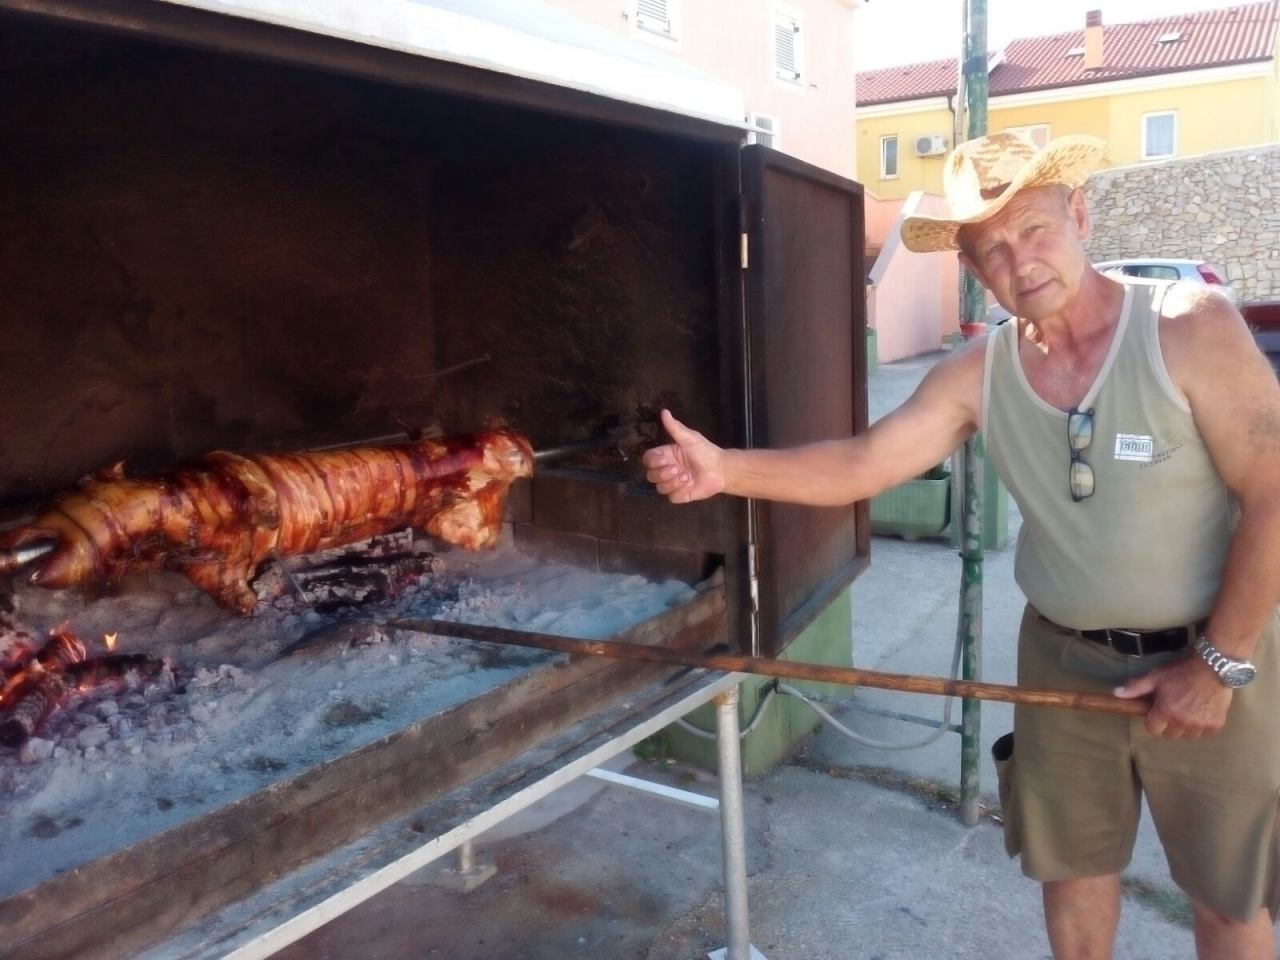 VLADO HALUSKA Barbecue Mason with 20 Years Experience 
Today working at Tawern Gromača 